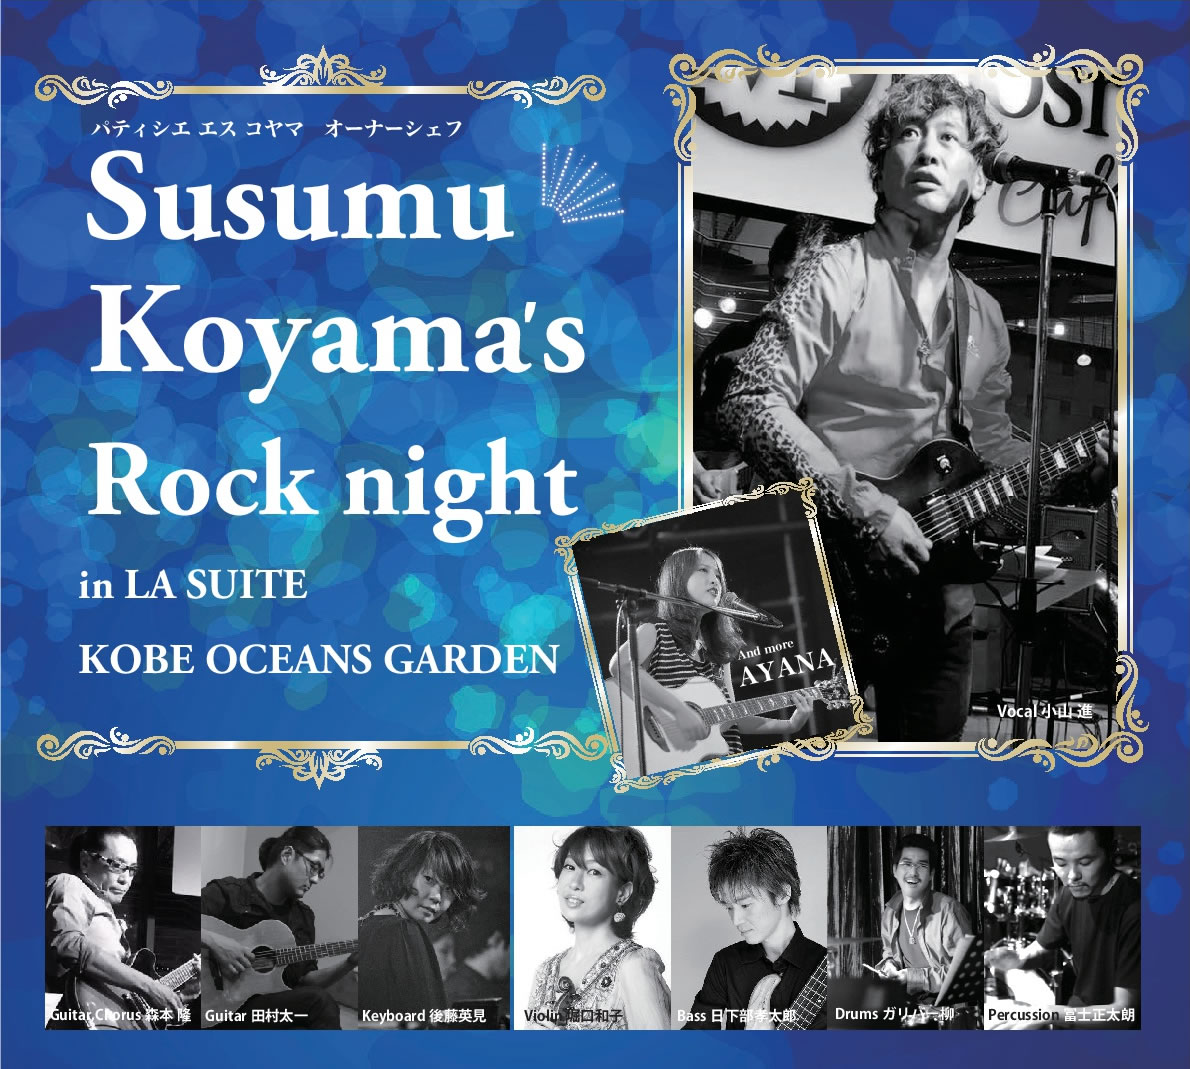 Susumu Koyama's Rock night